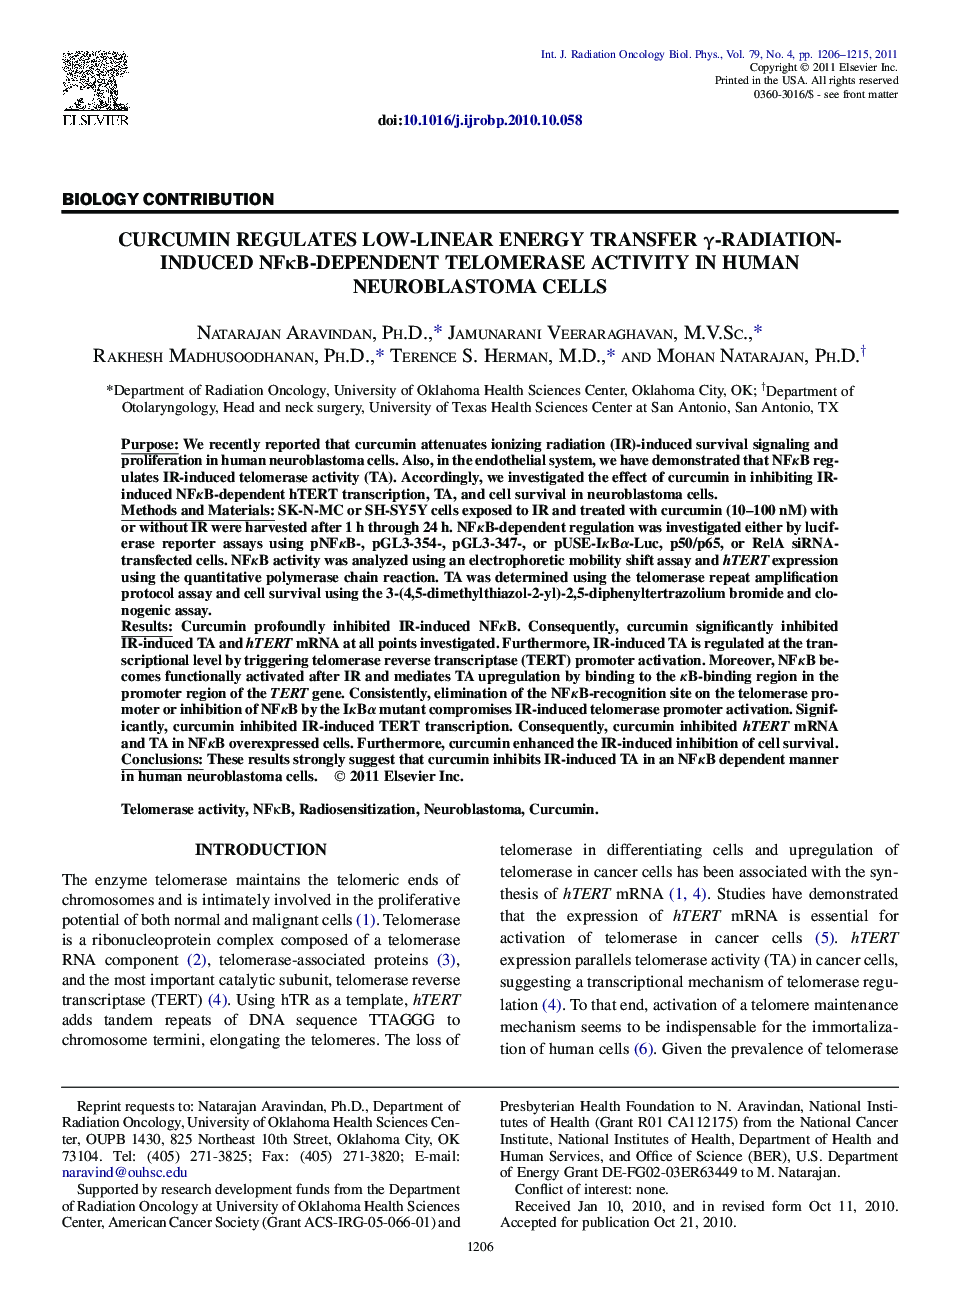 Curcumin Regulates Low-Linear Energy Transfer Î³-Radiation-Induced NFÎºB-Dependent Telomerase Activity in Human Neuroblastoma Cells